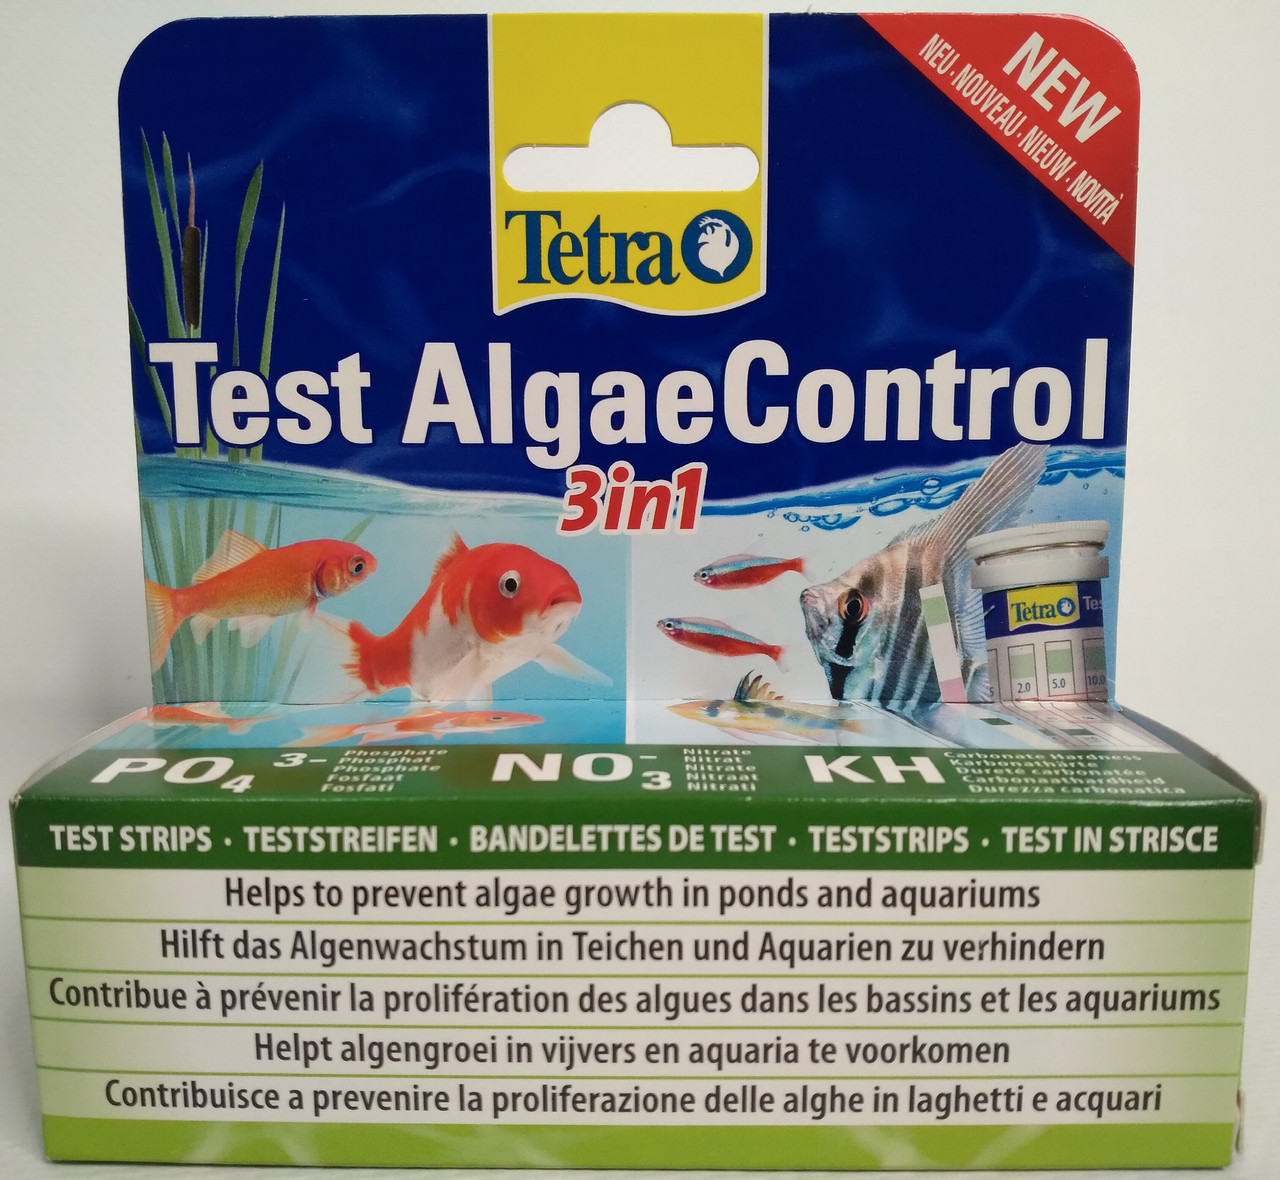      Test AlgaeControl 3 in1 PO4/NO3/KH  25